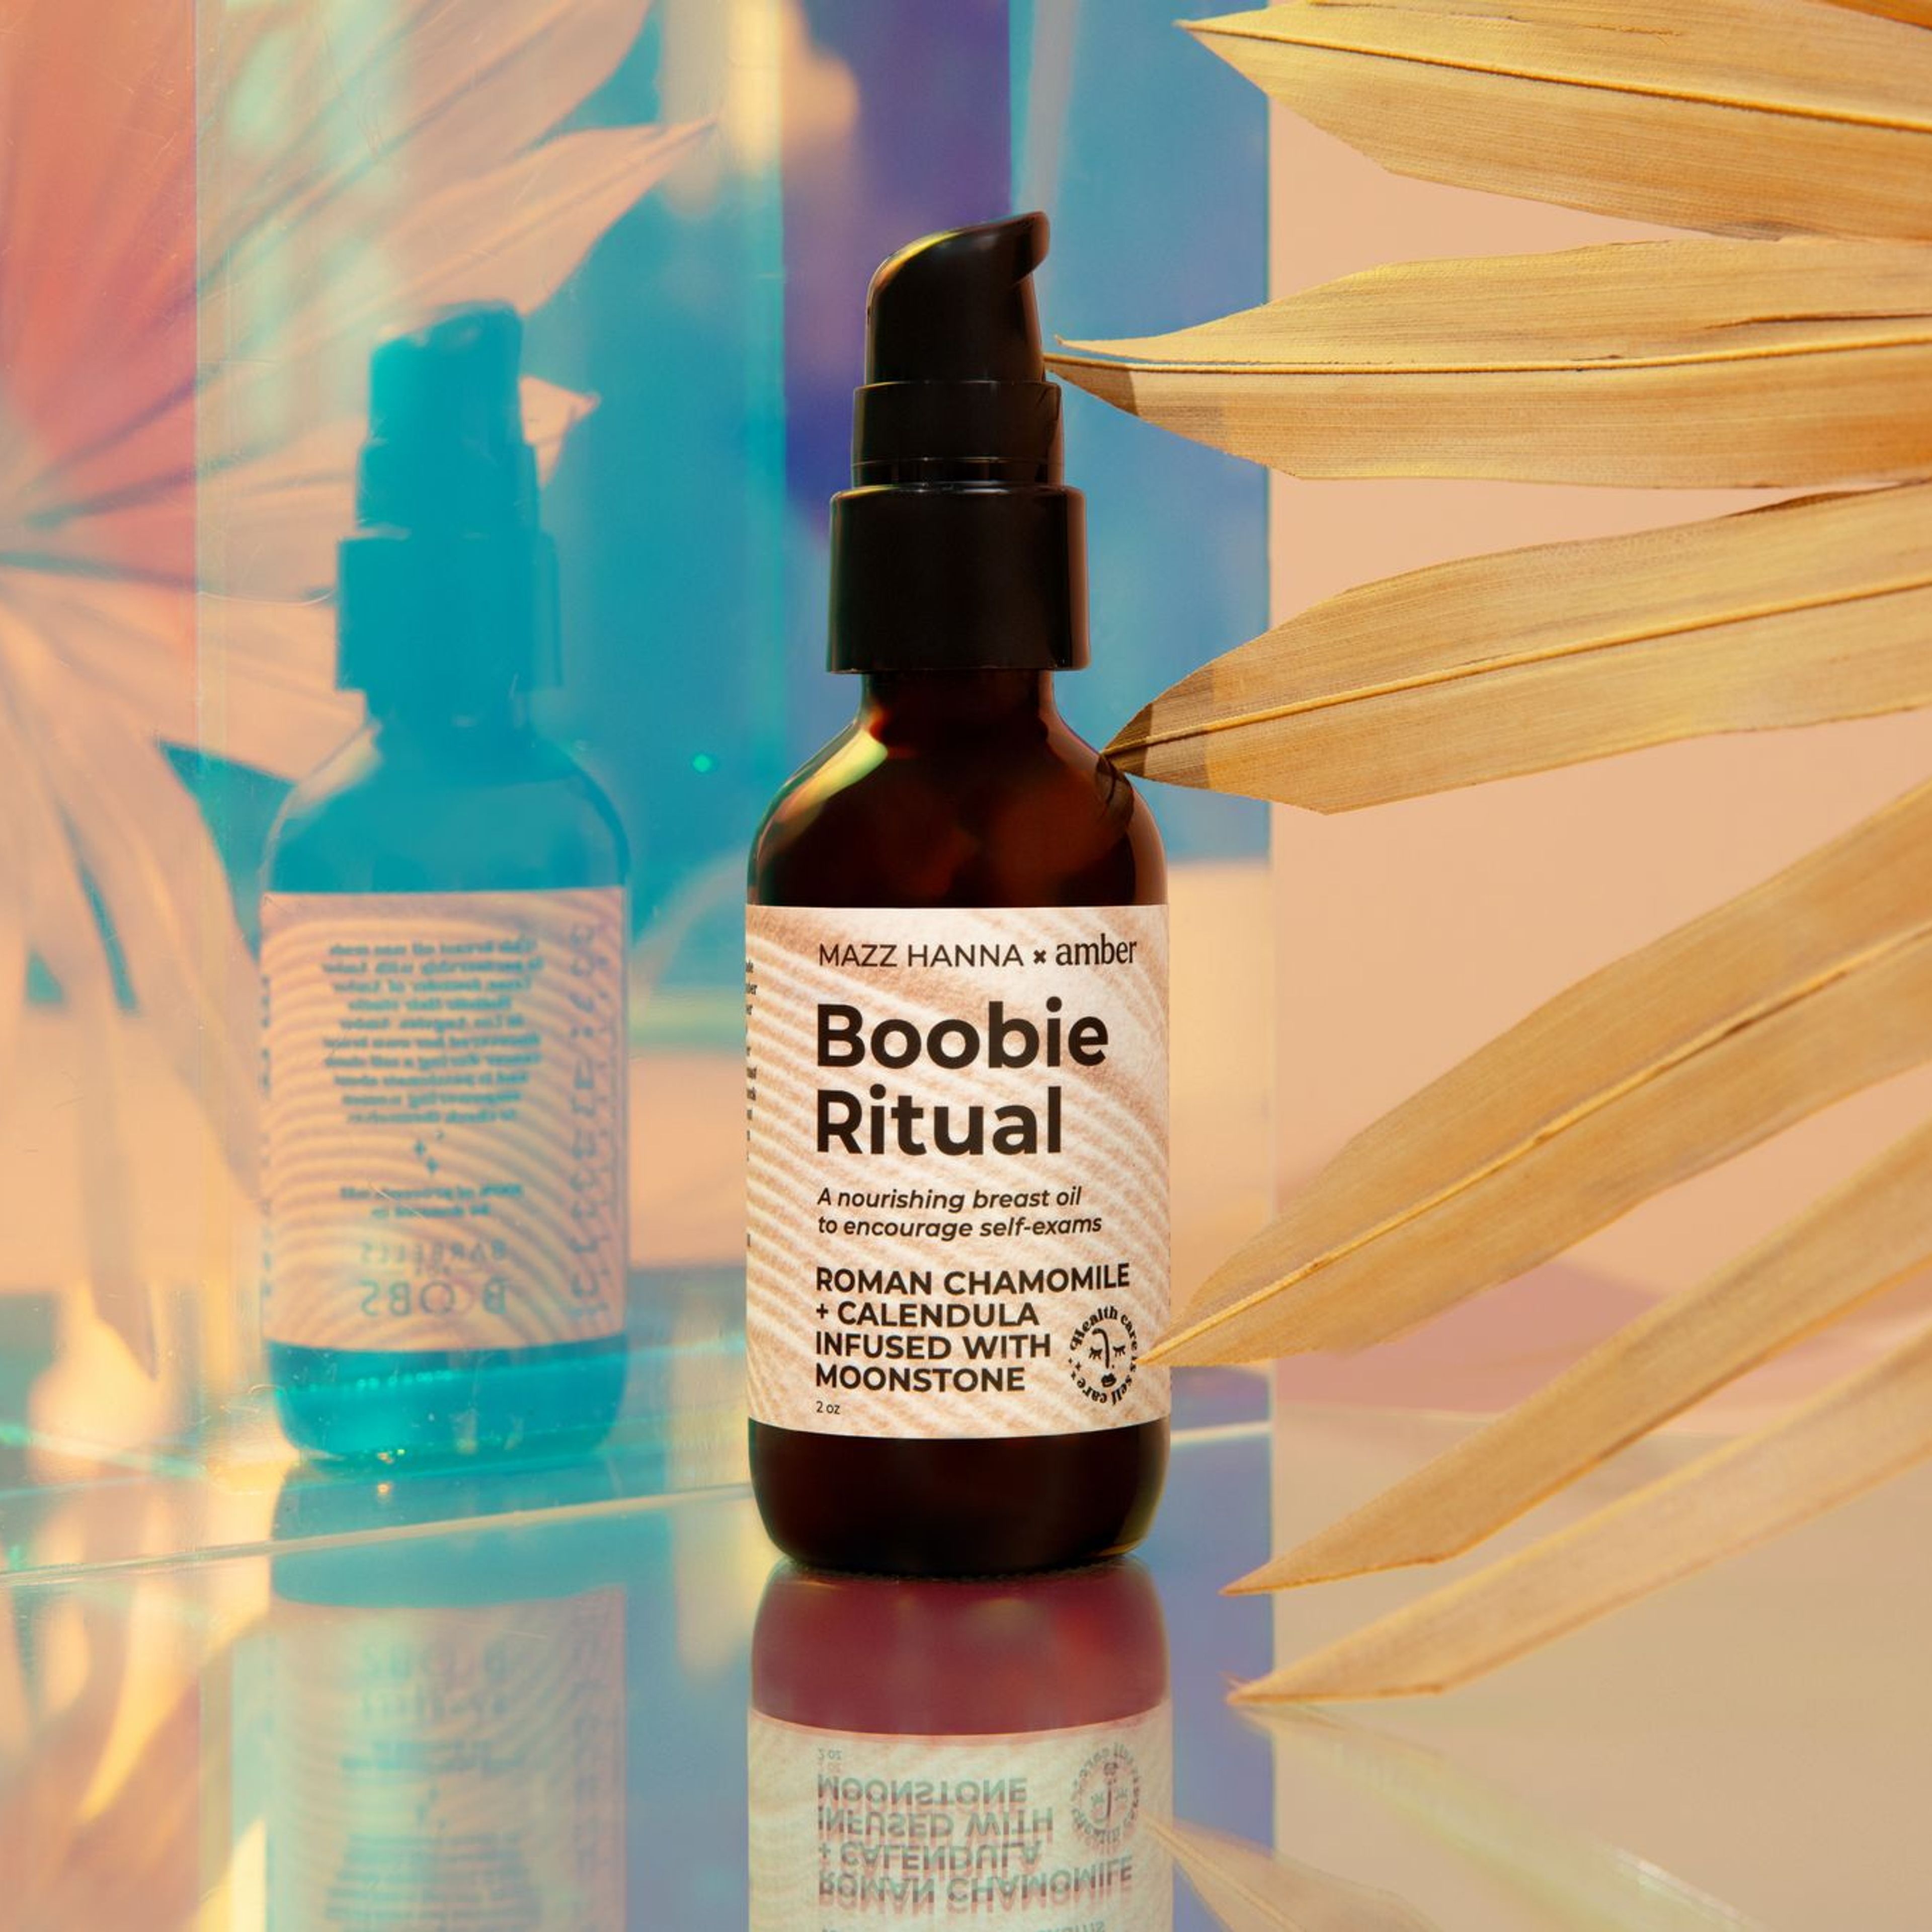 Boobie Ritual